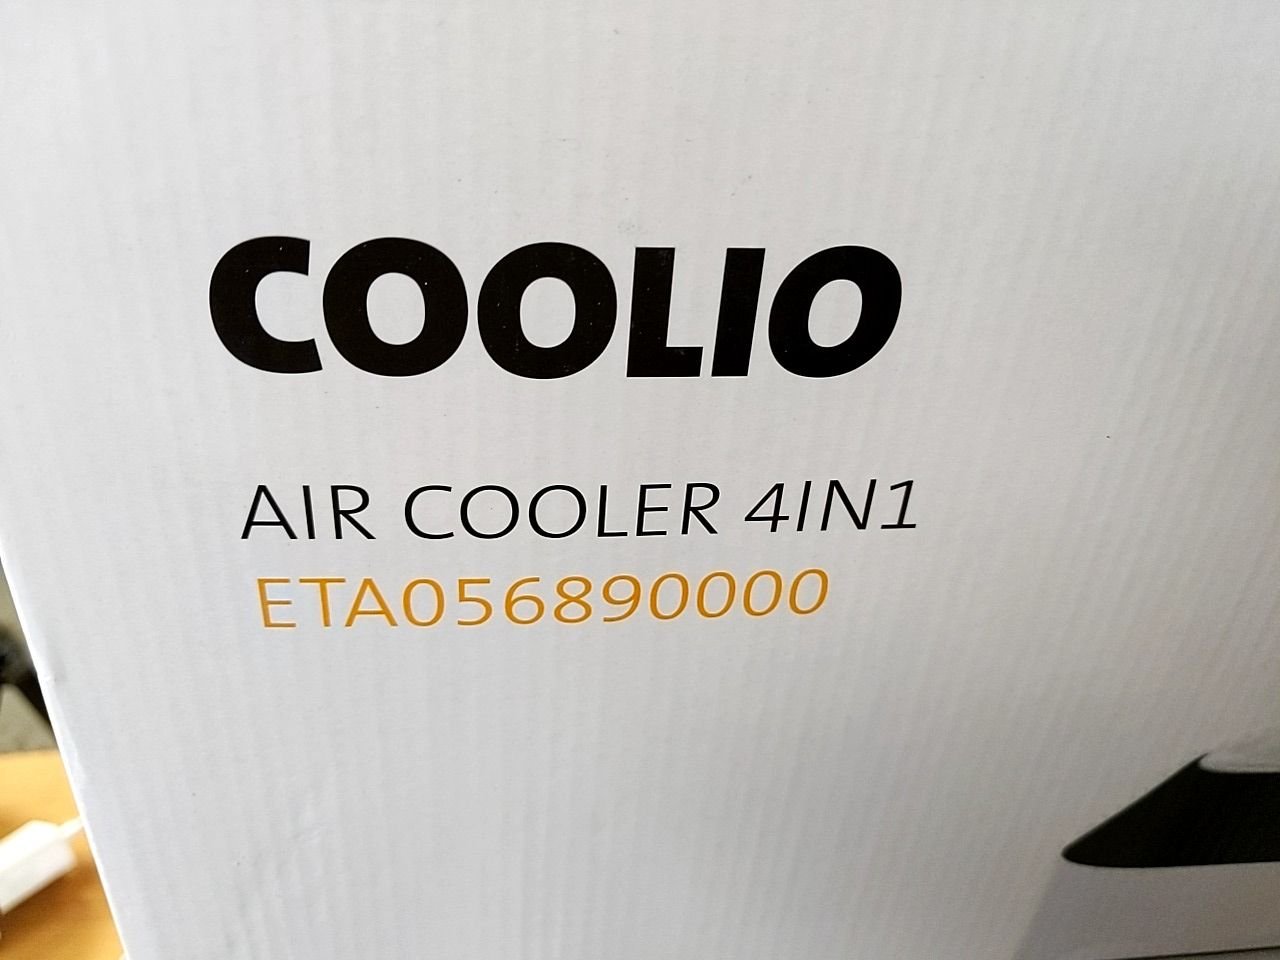 Ochlazovač vzduchu ETA Coolio ETA056890000